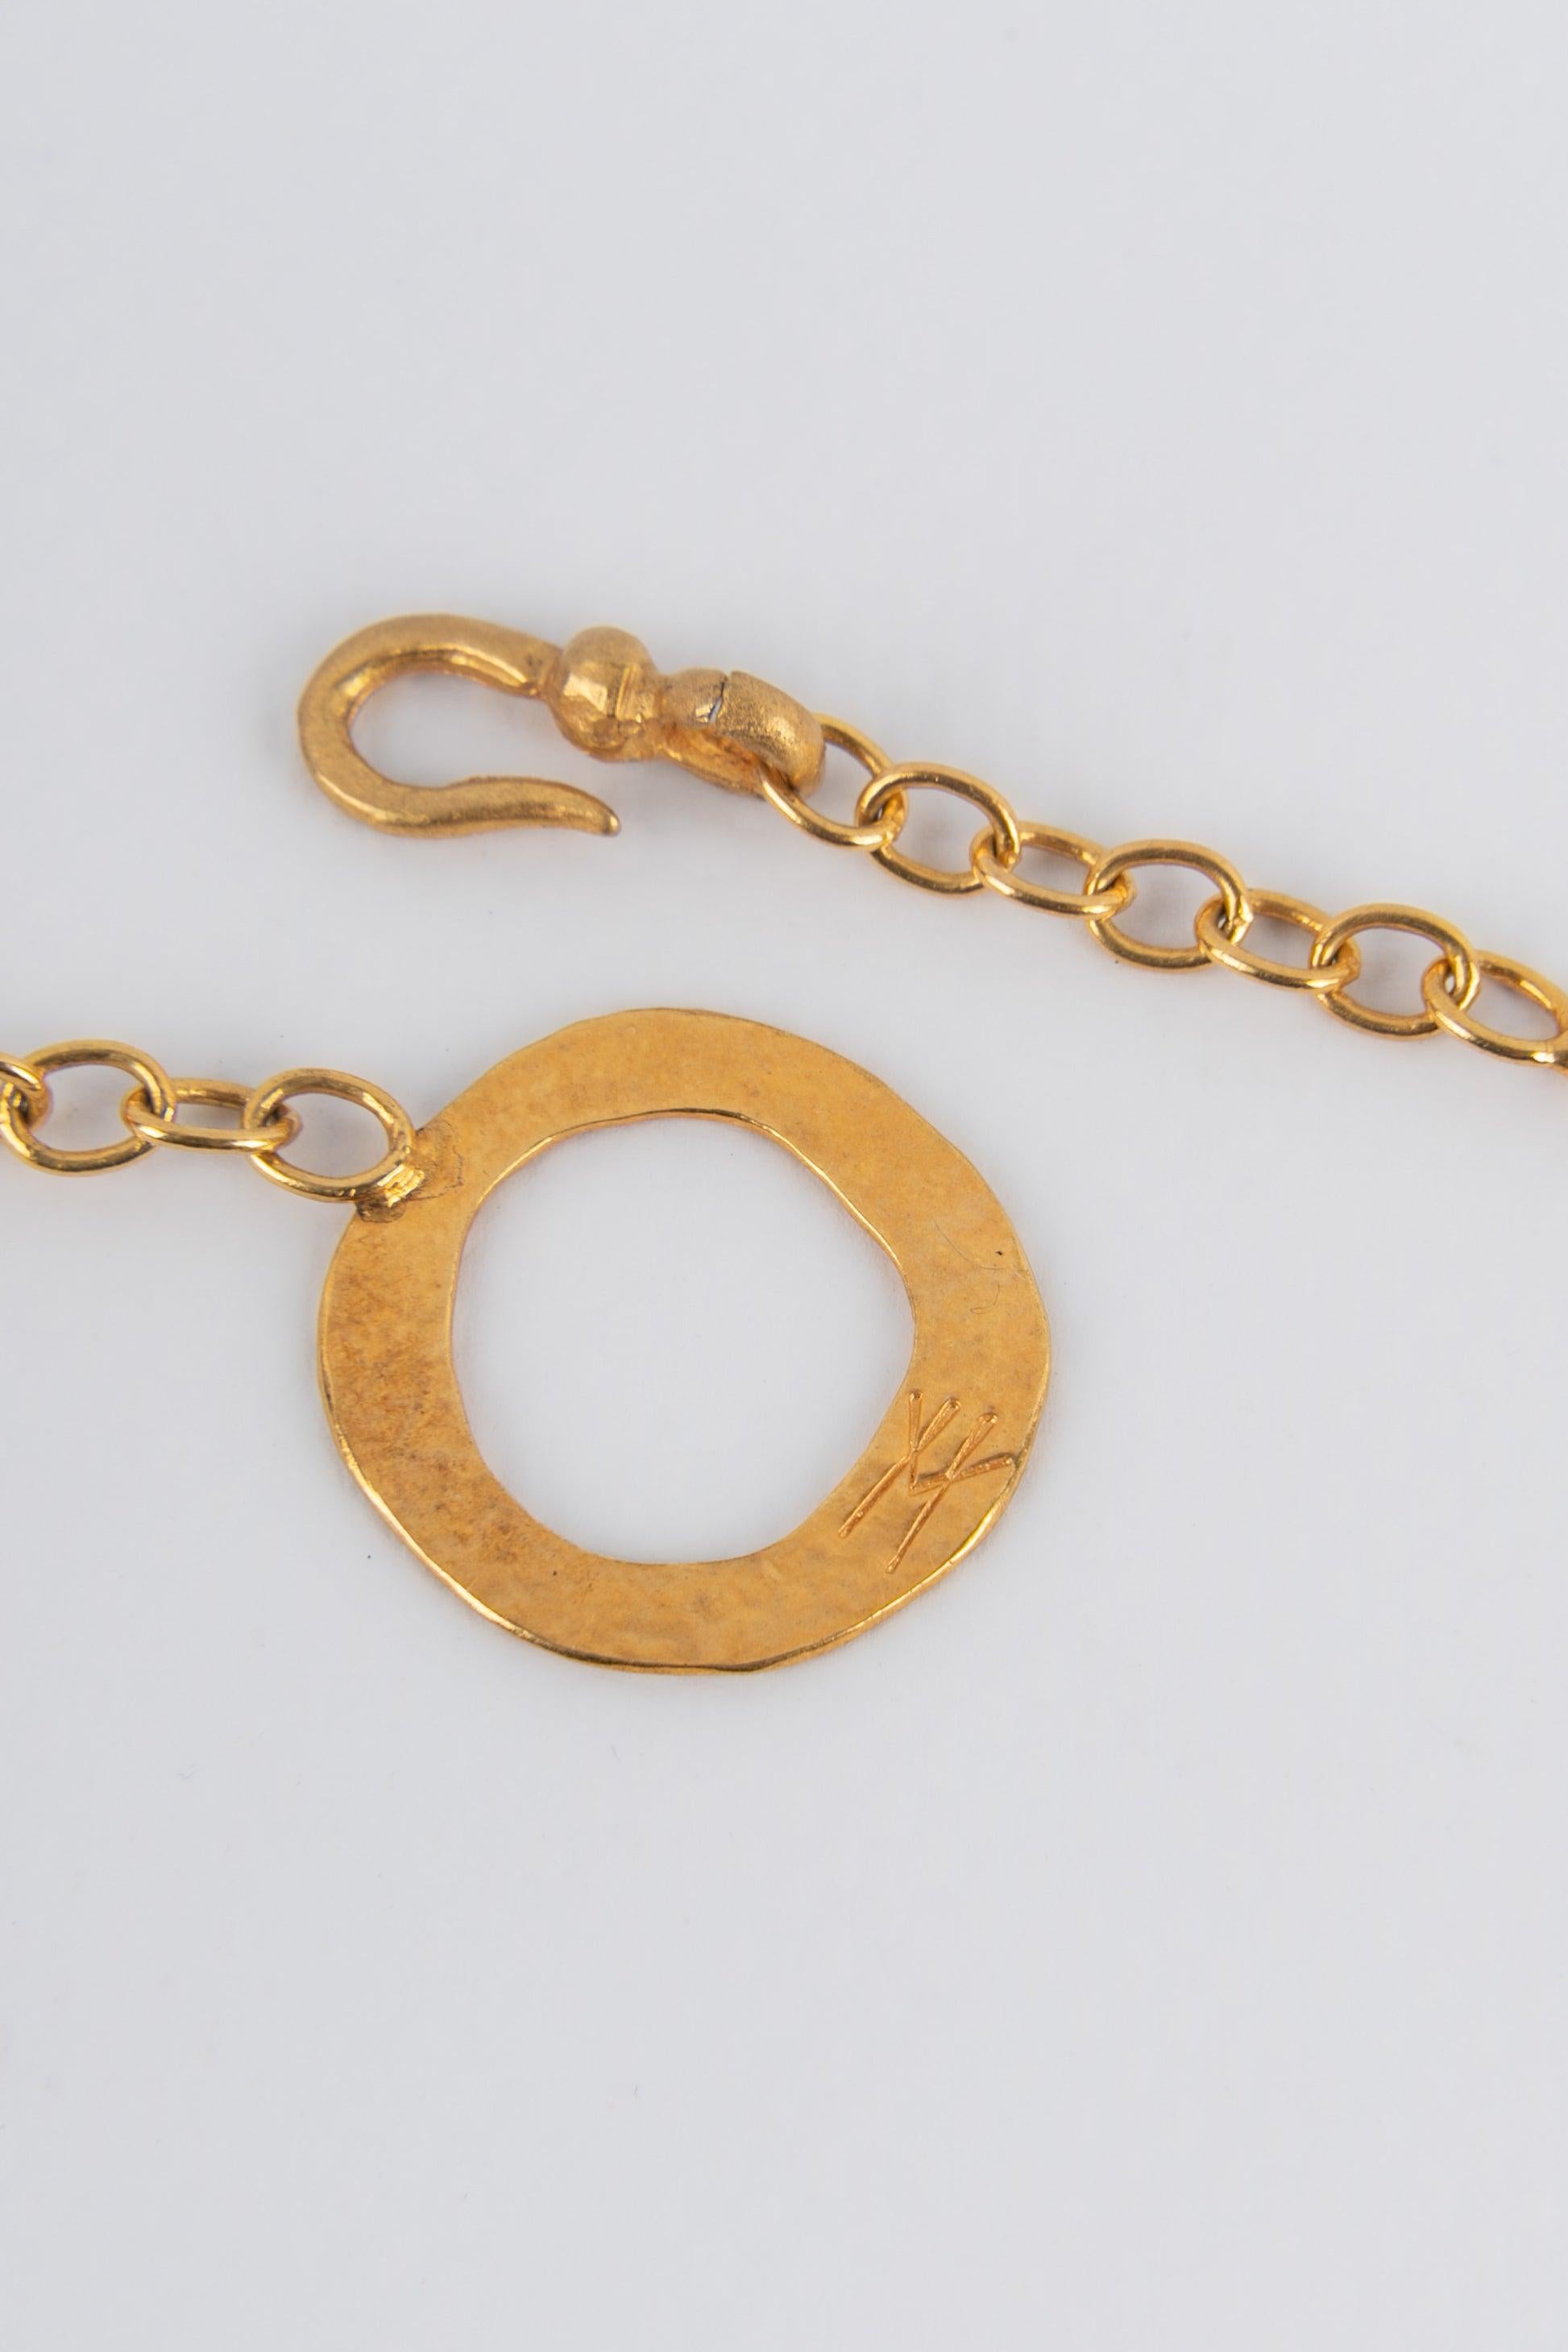 Van Der Straeten Golden Beaten Brass Necklace, 2000s For Sale 2